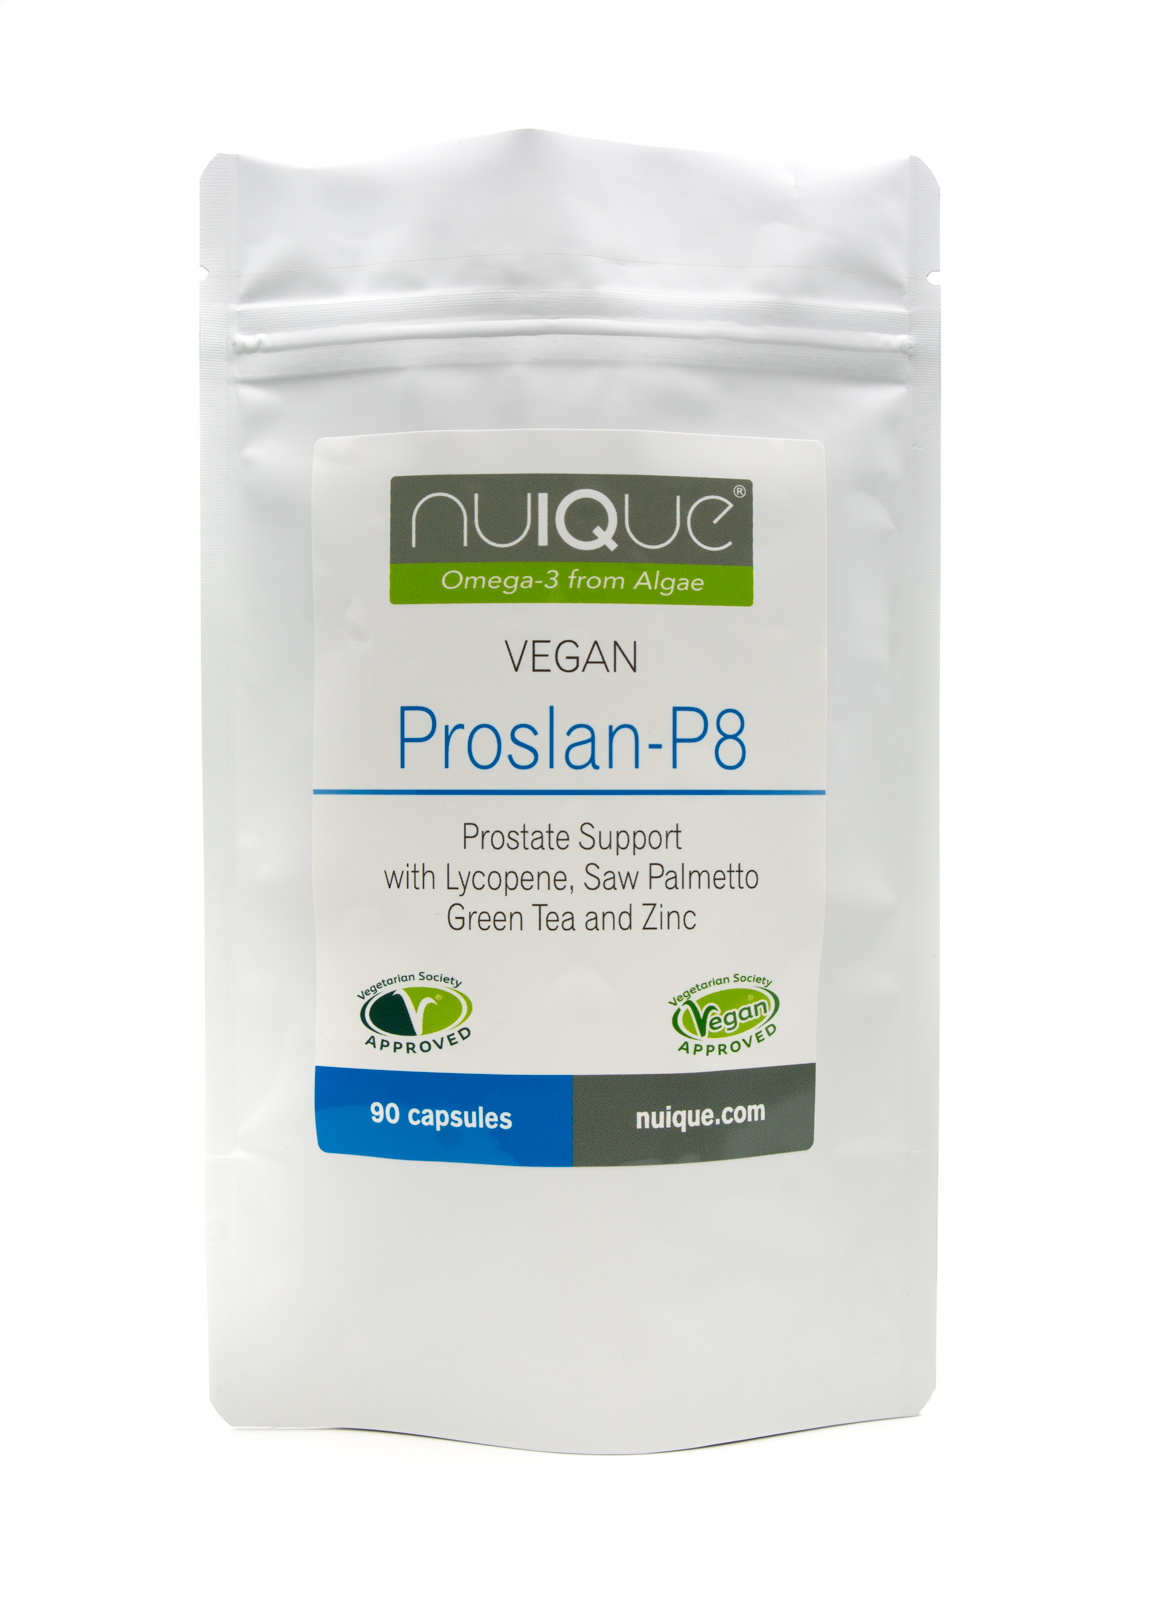 Proslan P8 vegan supplement to support prostate health